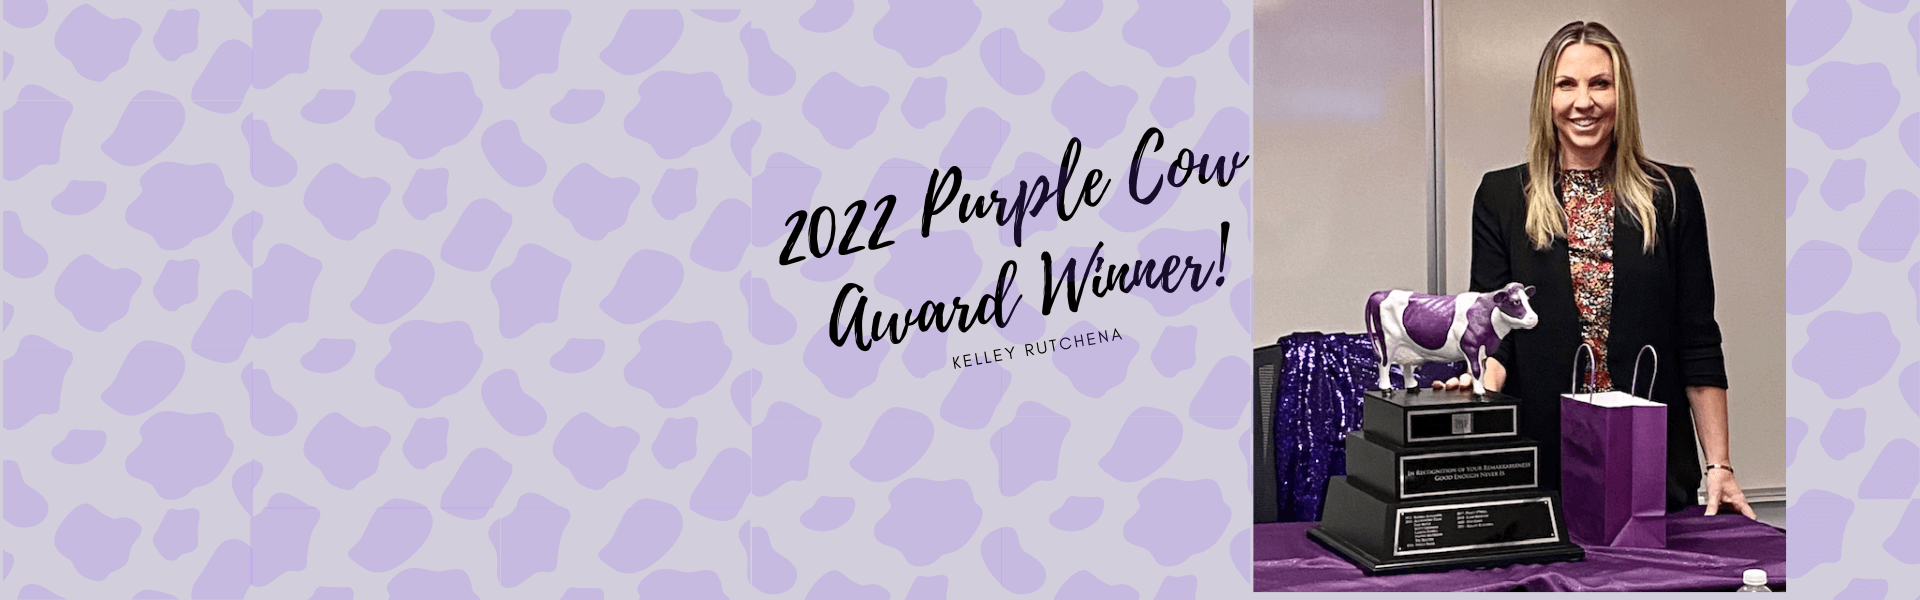 Purple Cow Award Winner - San Ramon, CA